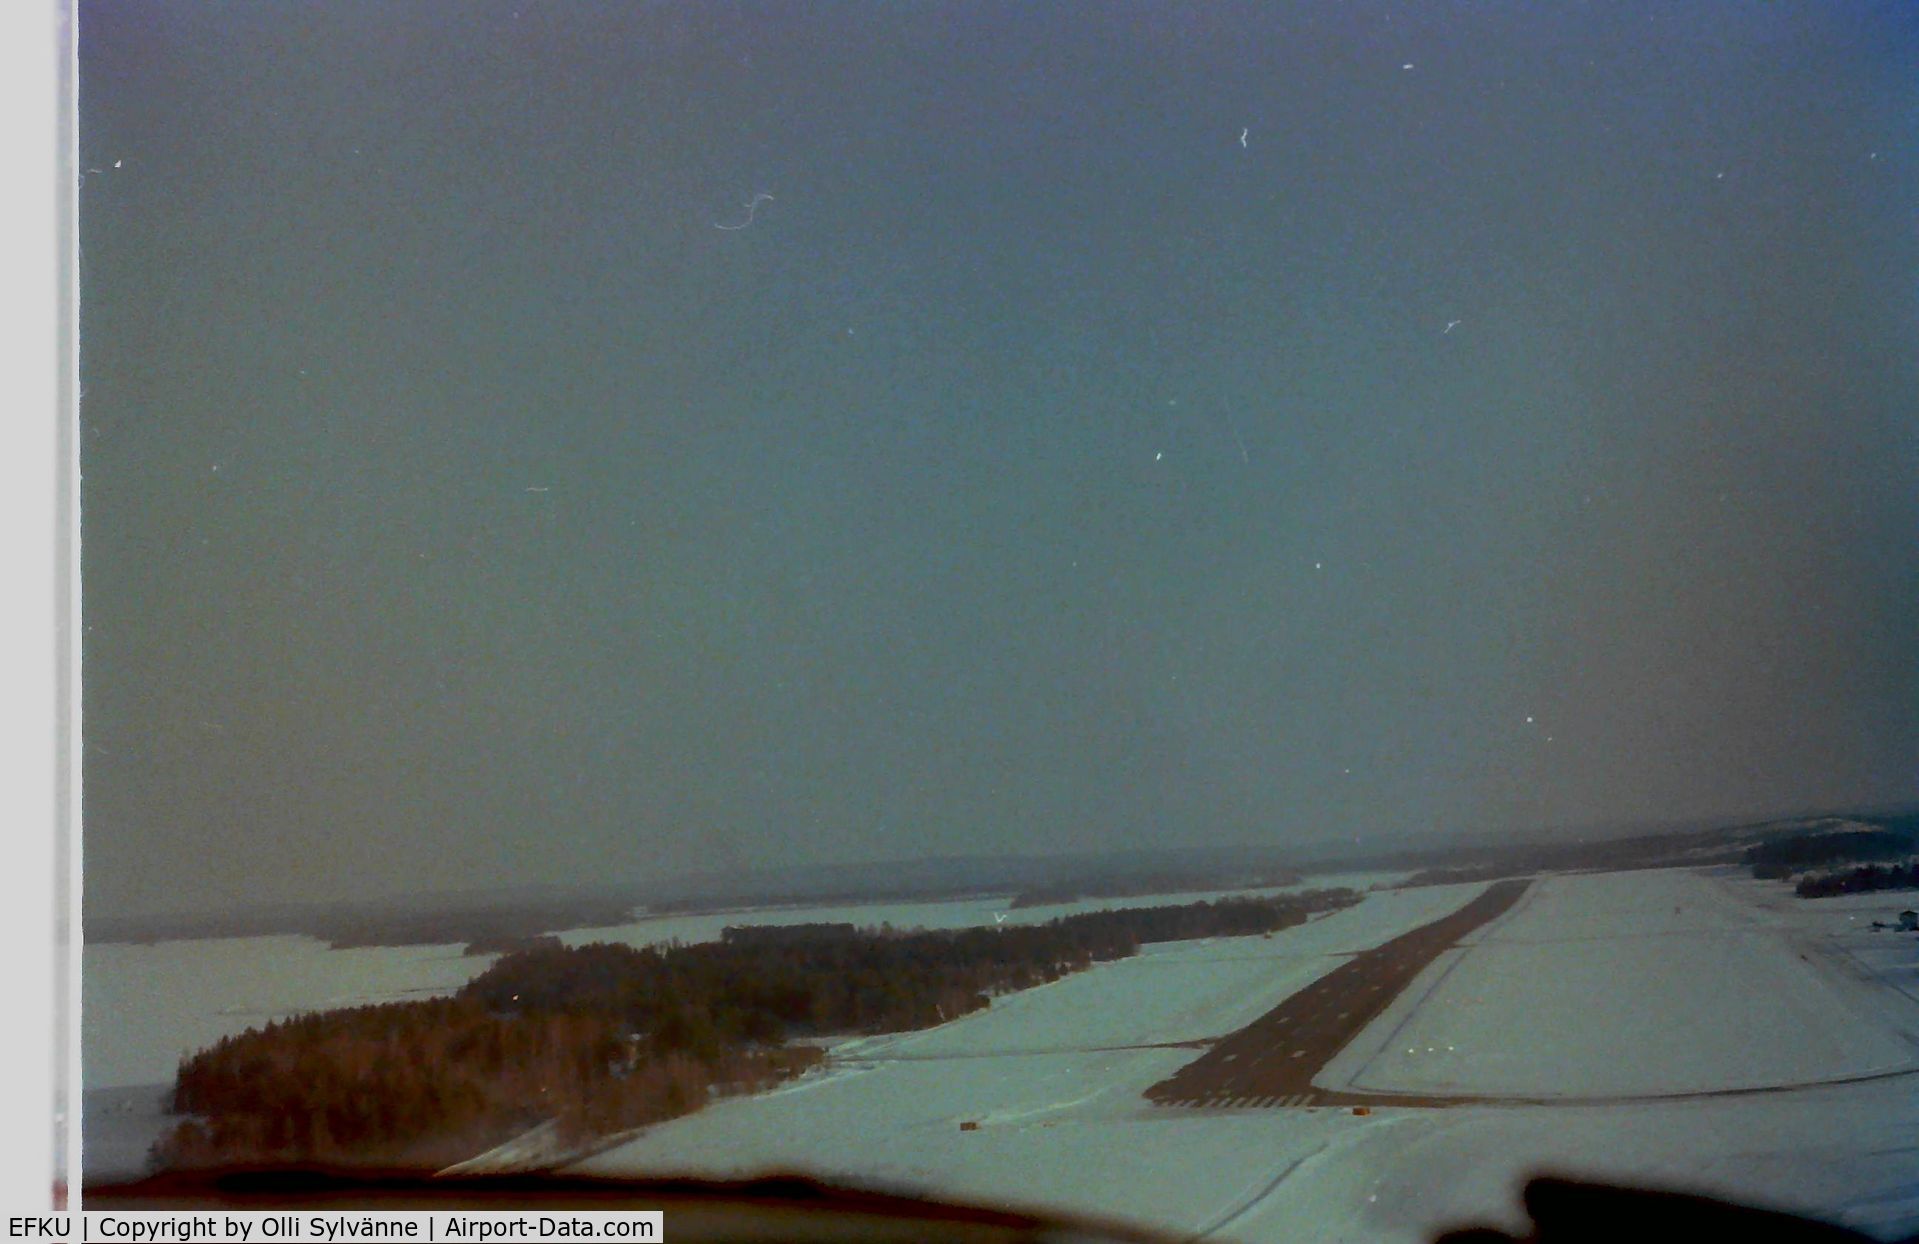 Kuopio Airport, Kuopio / Siilinjärvi Finland (EFKU) - Main runway. Photo 1978